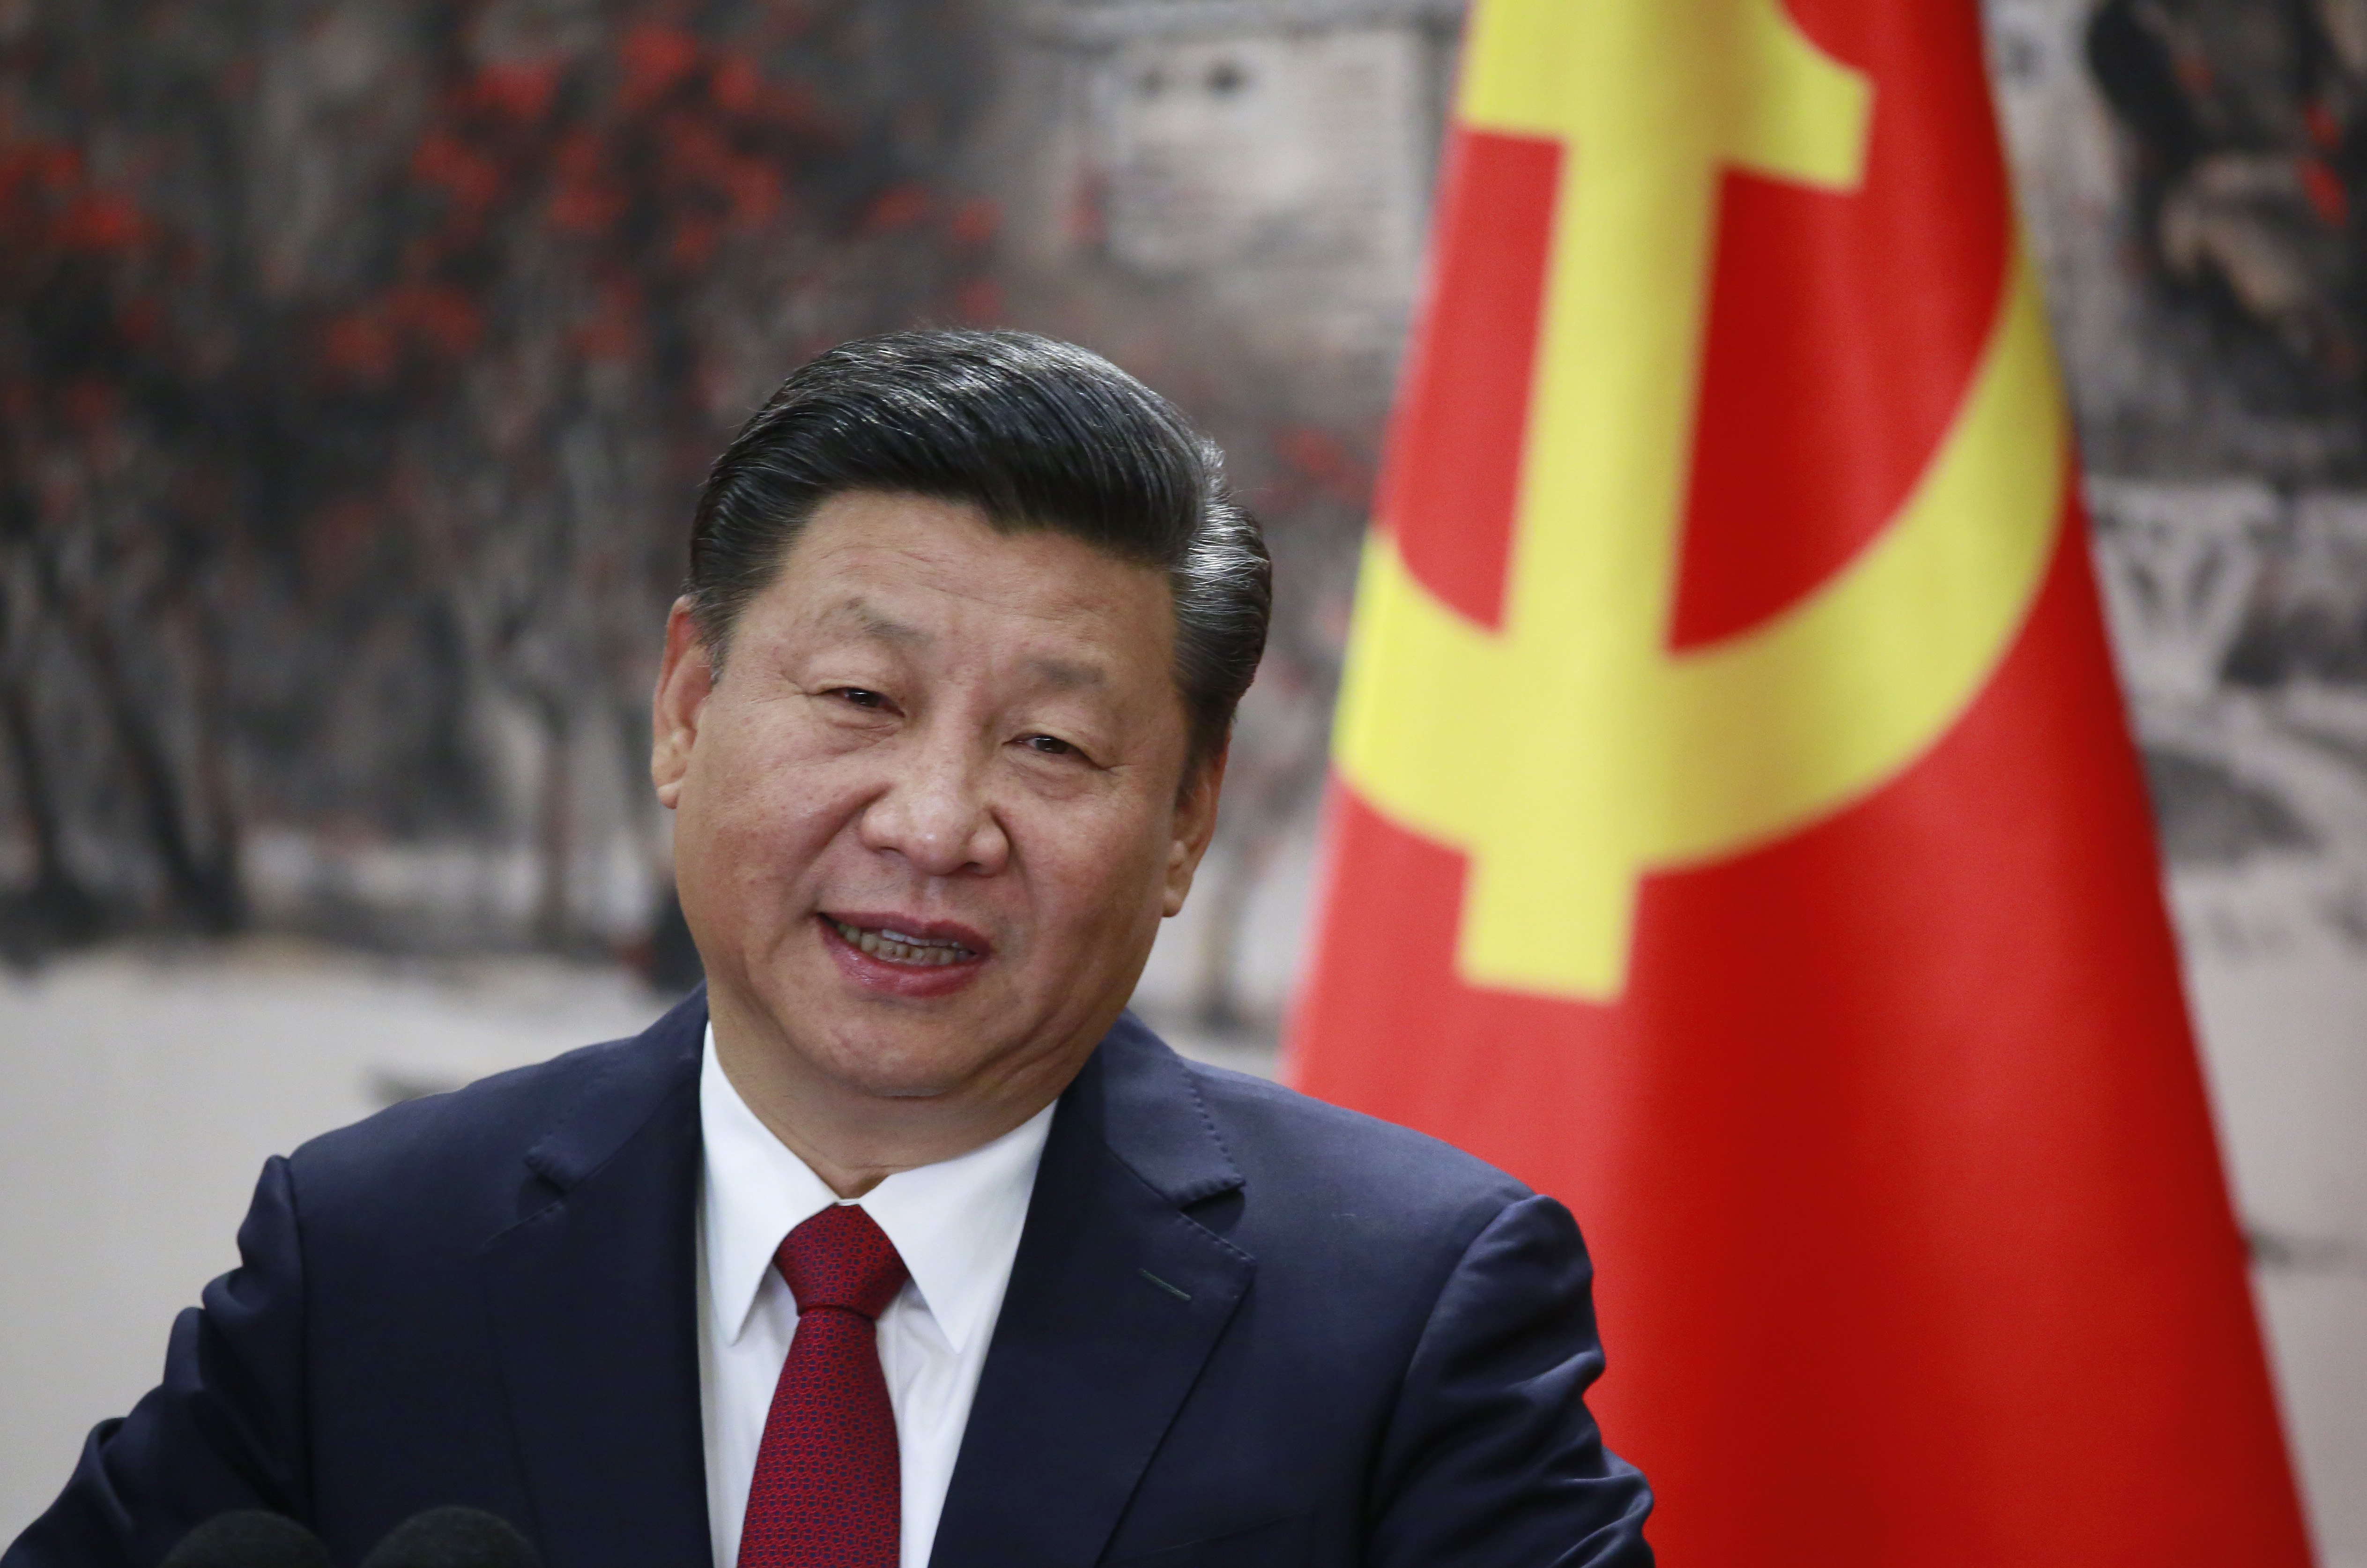 china president xi jinping partijcongres derde termijn